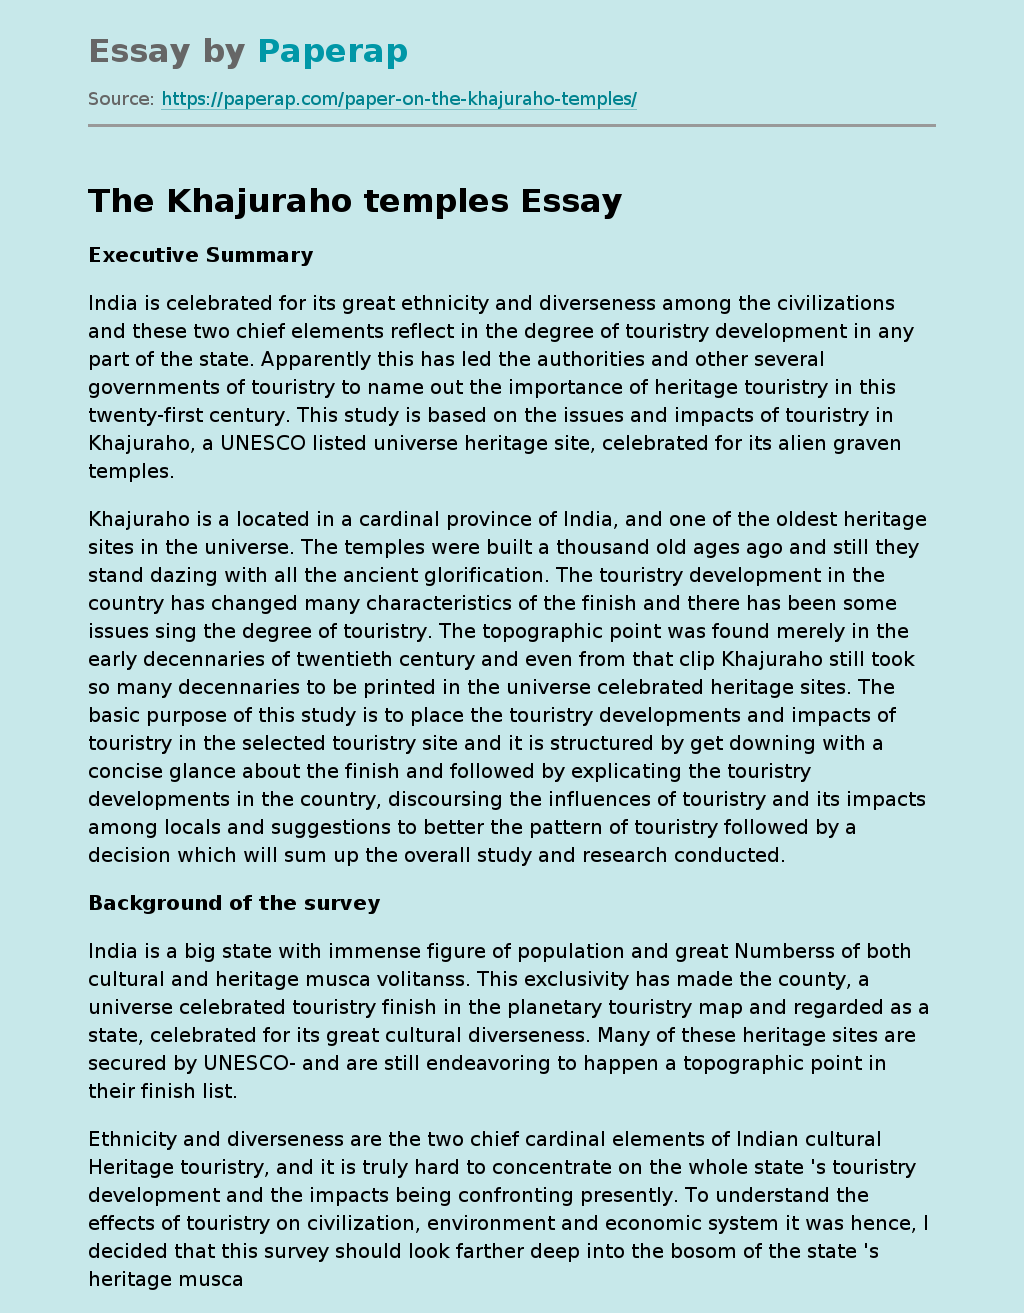 The Khajuraho temples